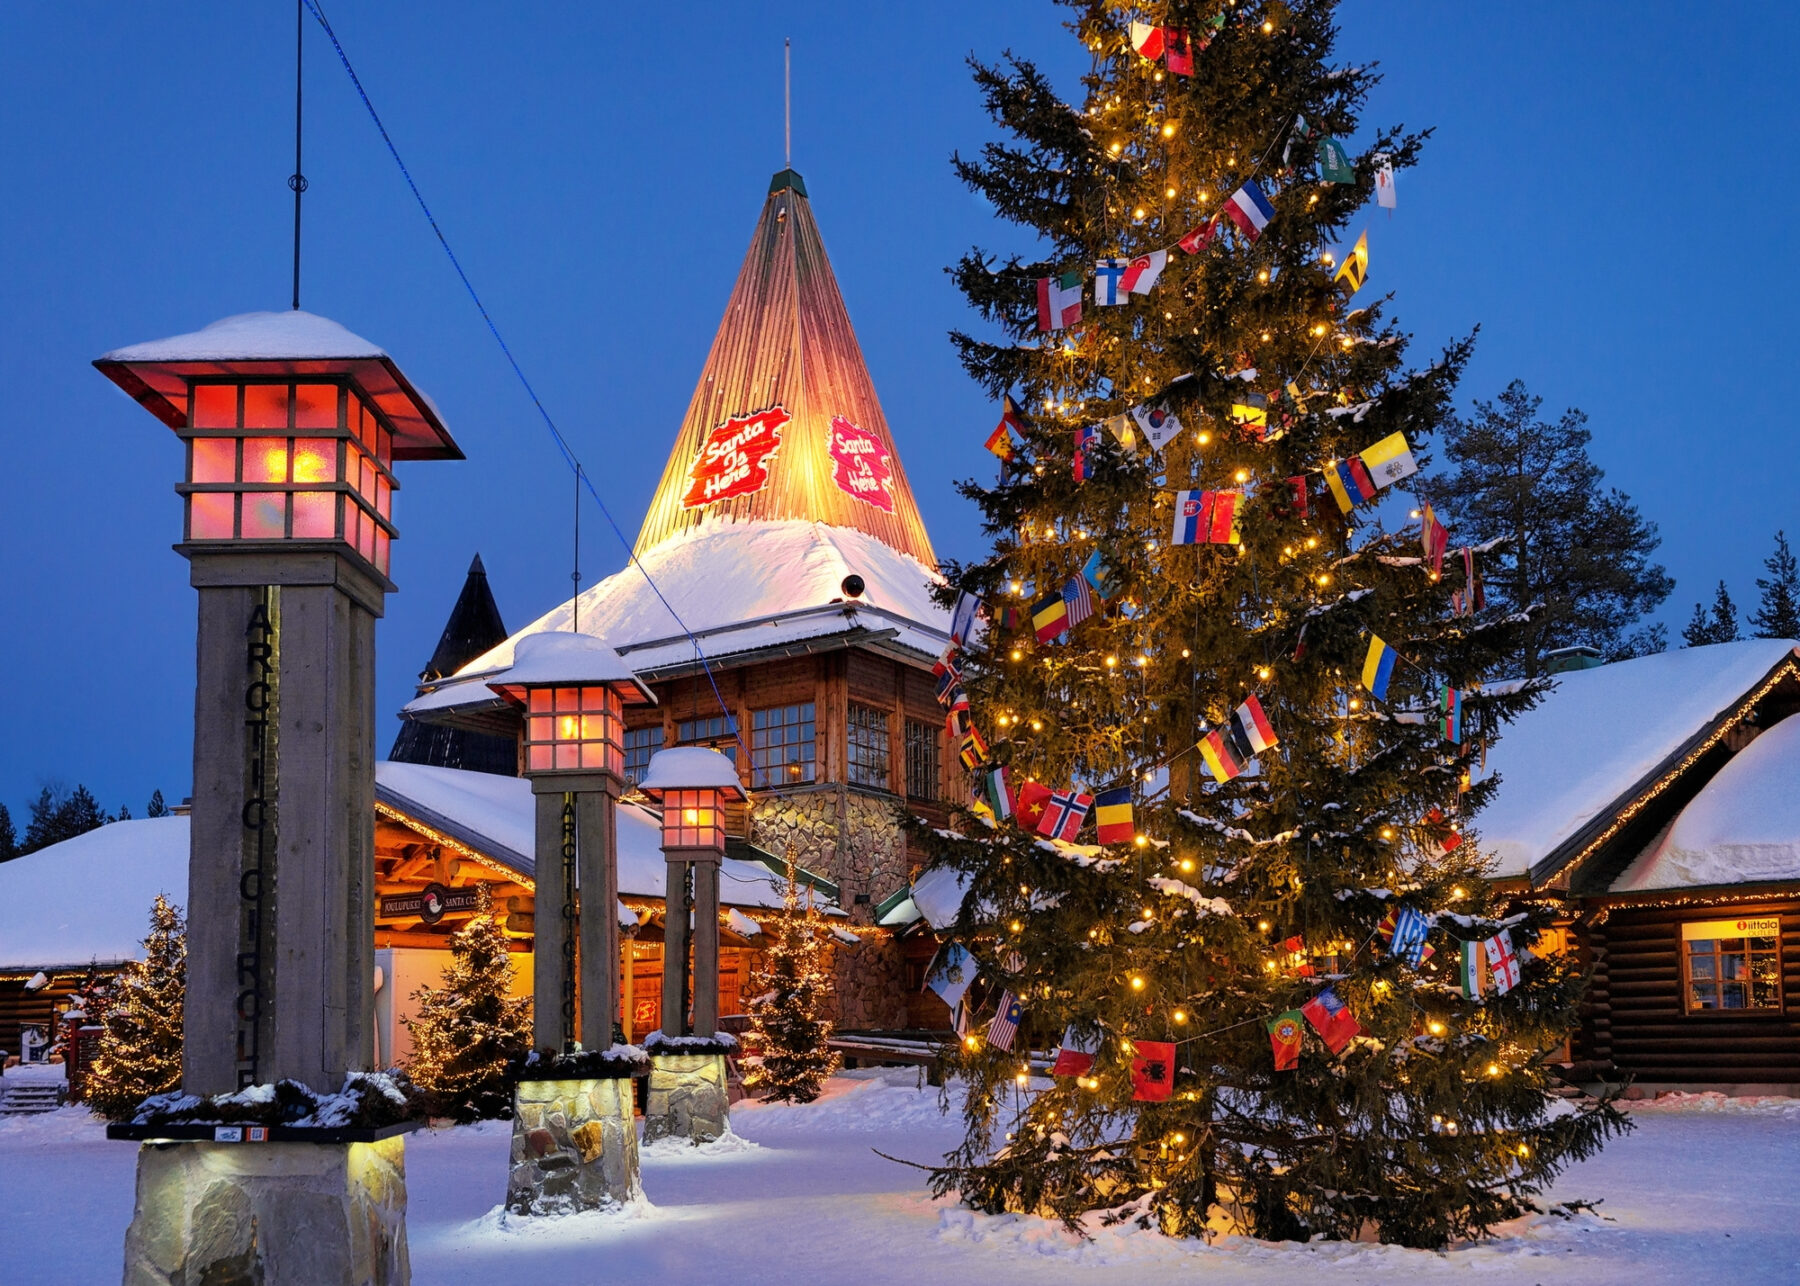 Santa Claus Village Lapland at night illuminated with light